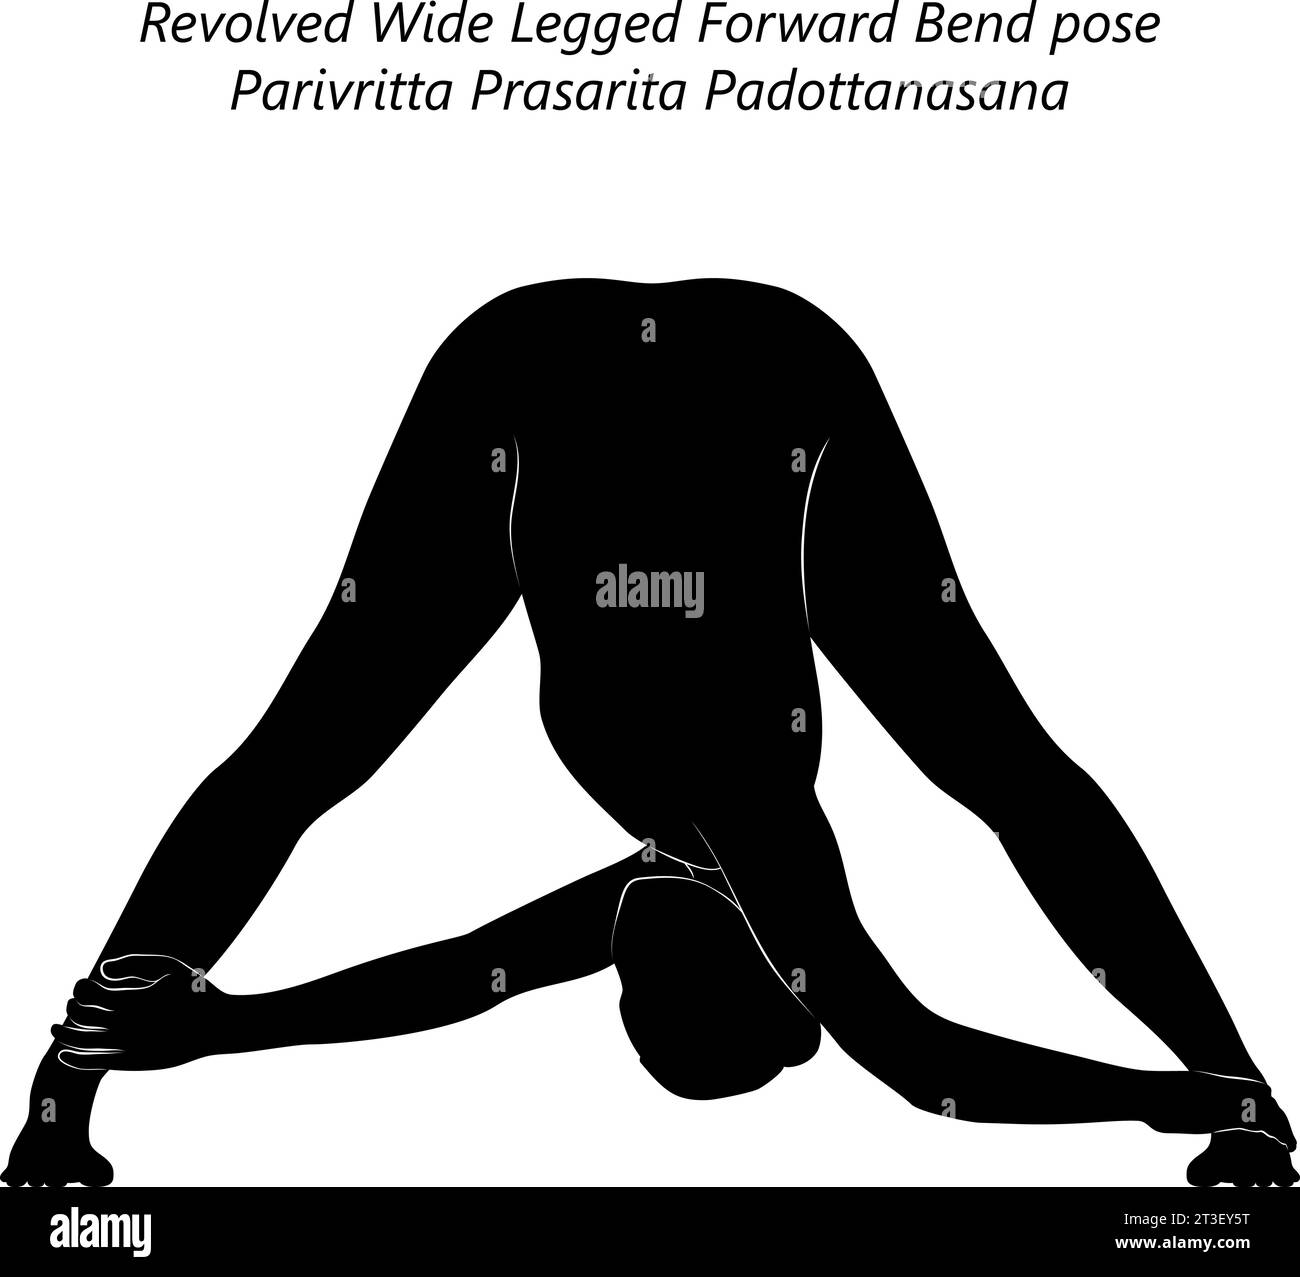 Silhouette of woman doing yoga Parivritta Prasarita Padottanasana. Revolved Wide Legged Forward Bend pose. Isolated vector illustration. Stock Vector